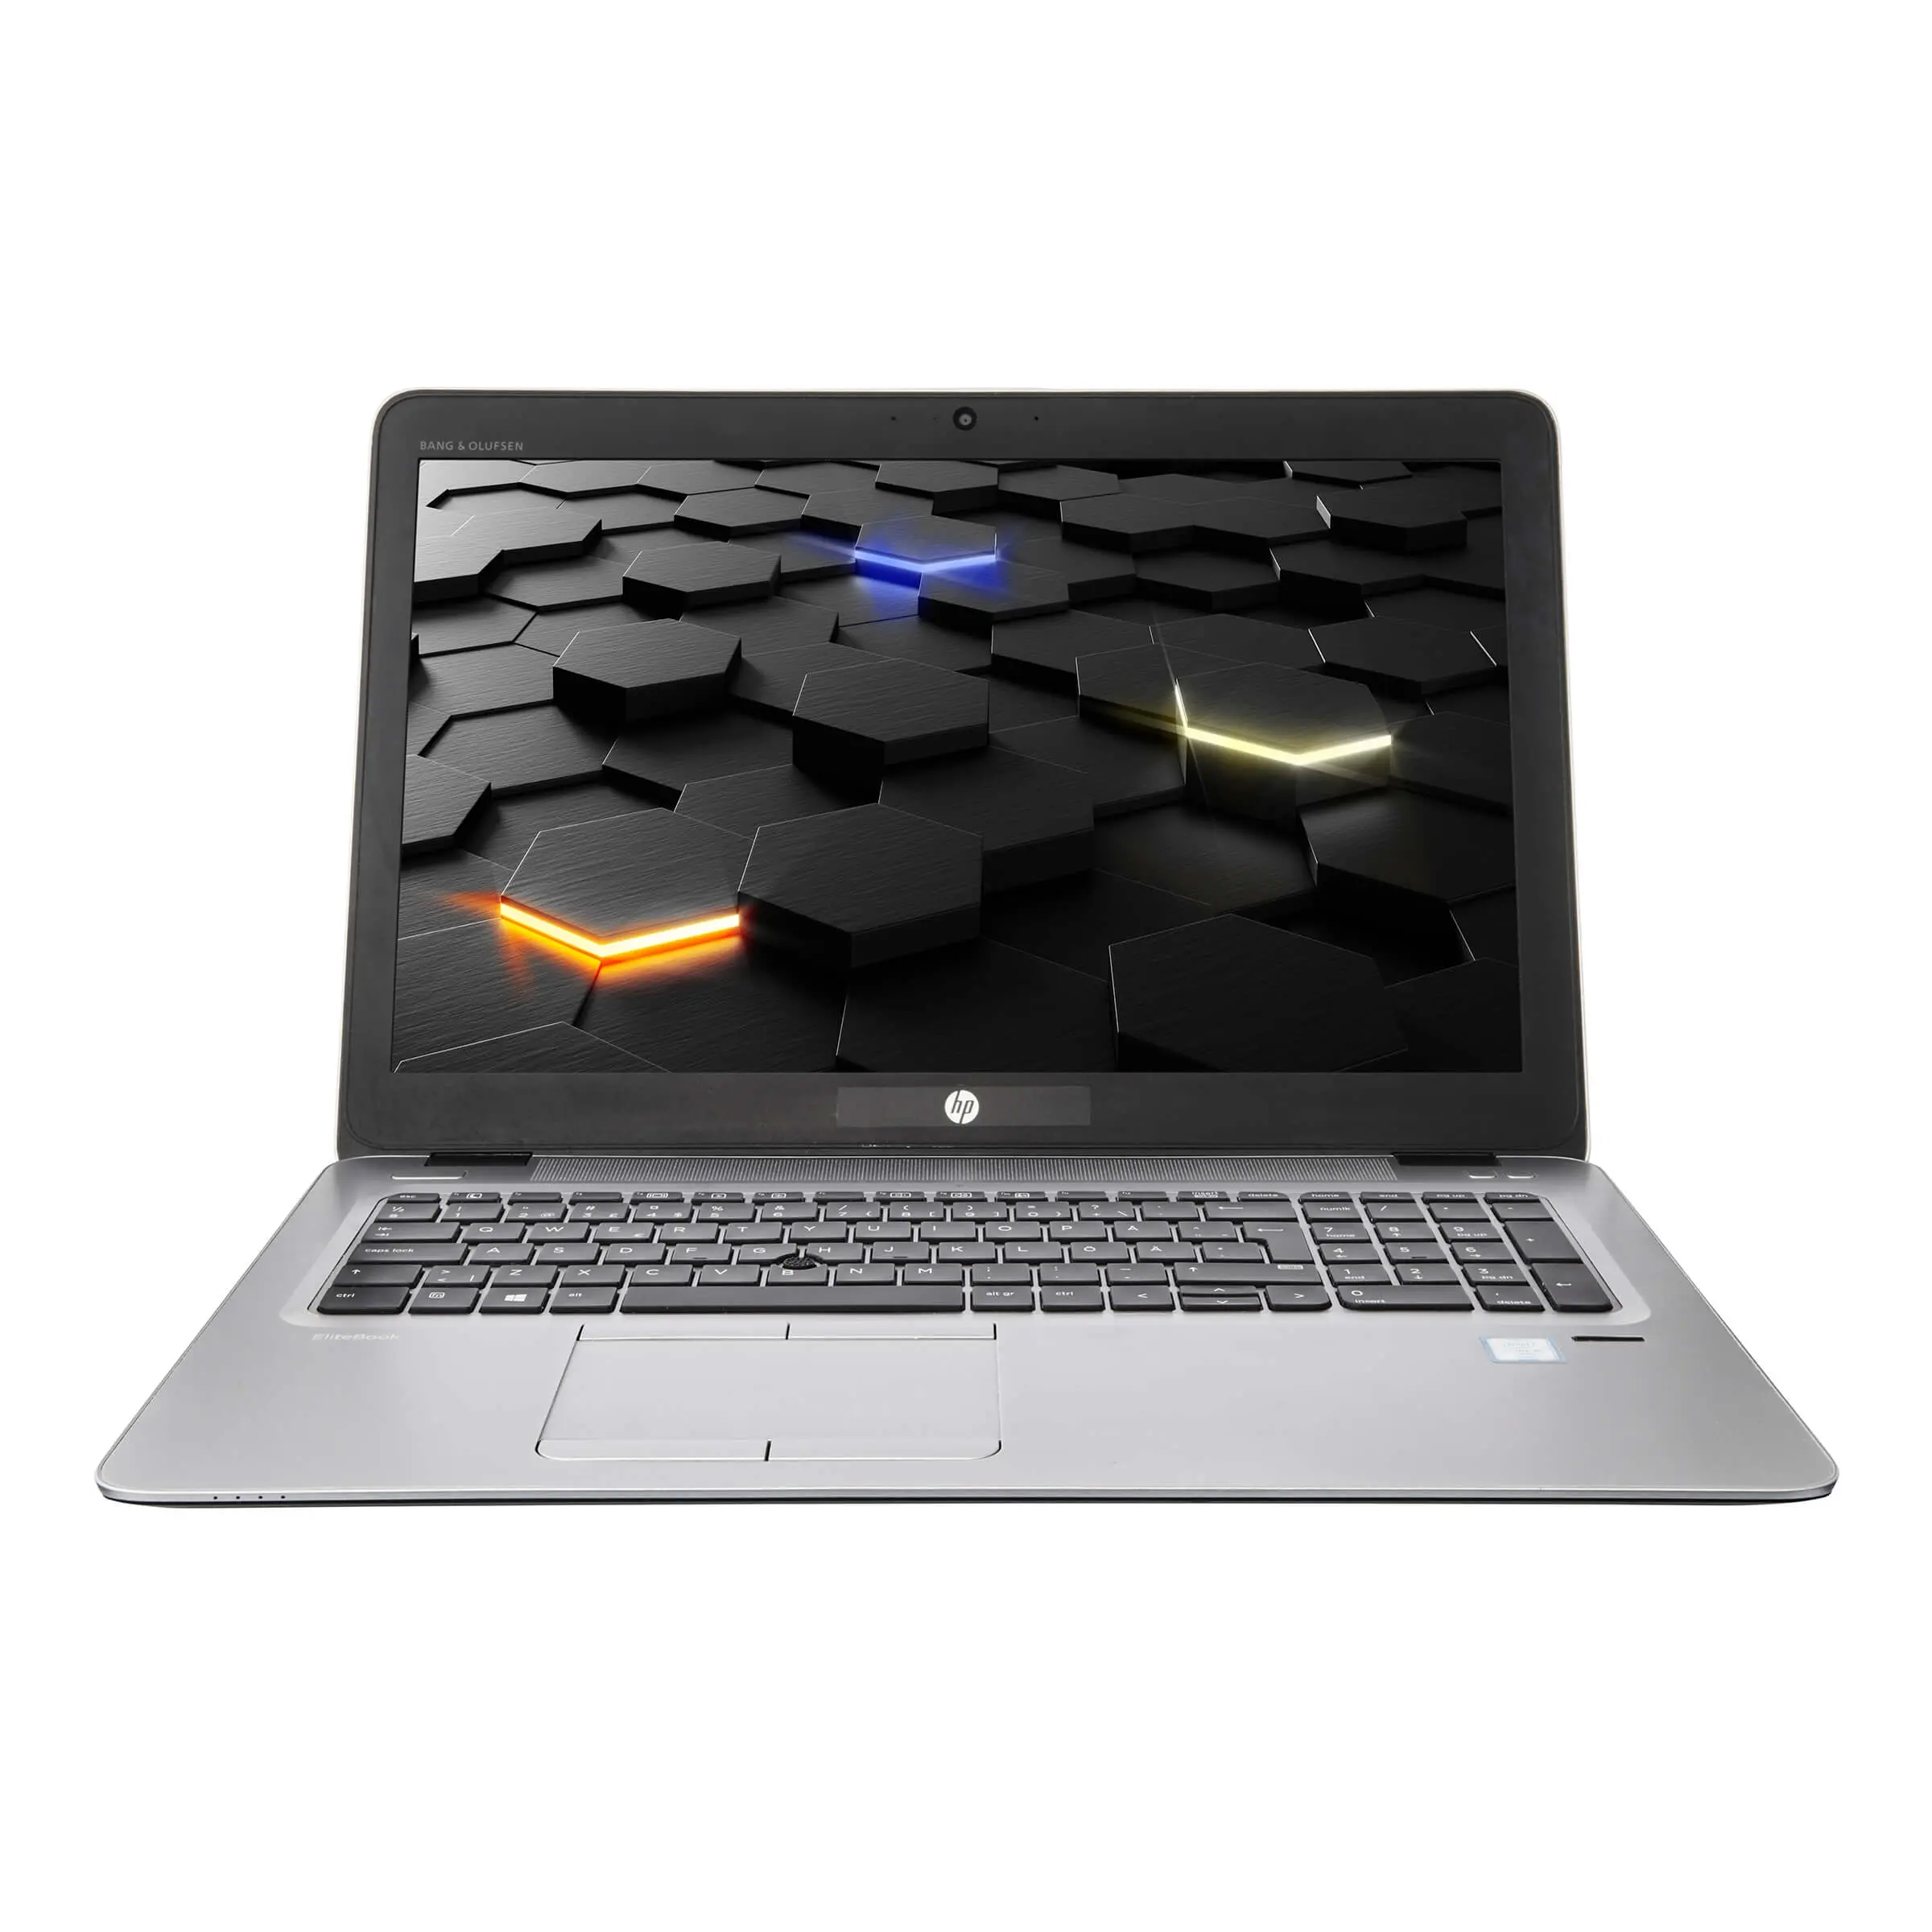 HP EliteBook 850 G3, i5, 15.6 Zoll Full-HD, 8GB, 1TB HDD, Webcam, LTE, Windows 10 Pro